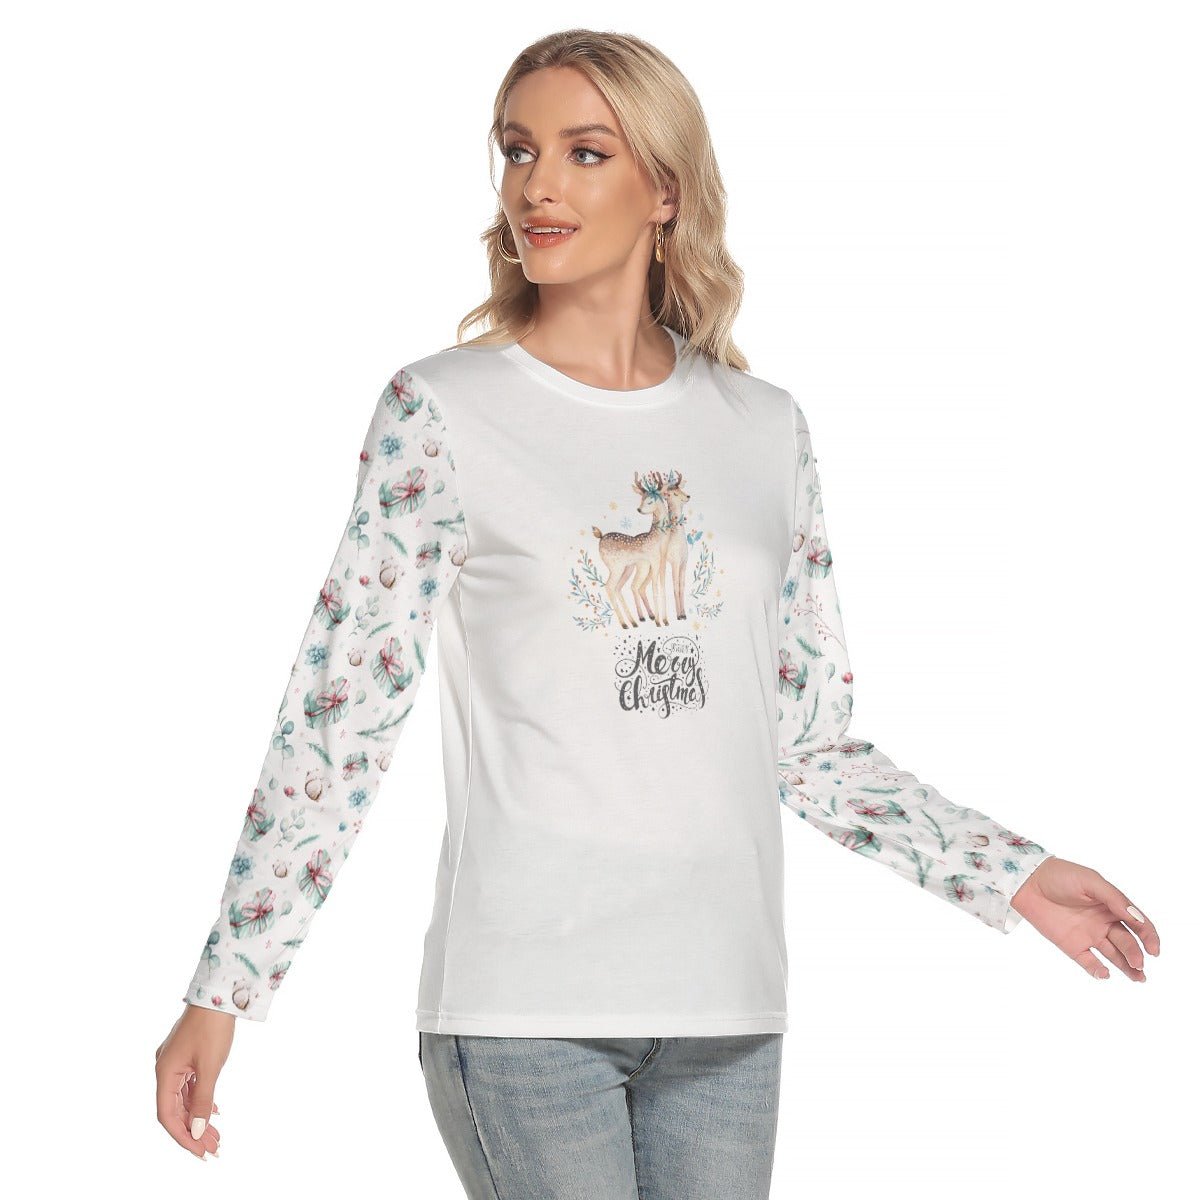 Women's Long Sleeve Christmas T-shirt - Two Deers - Festive Style